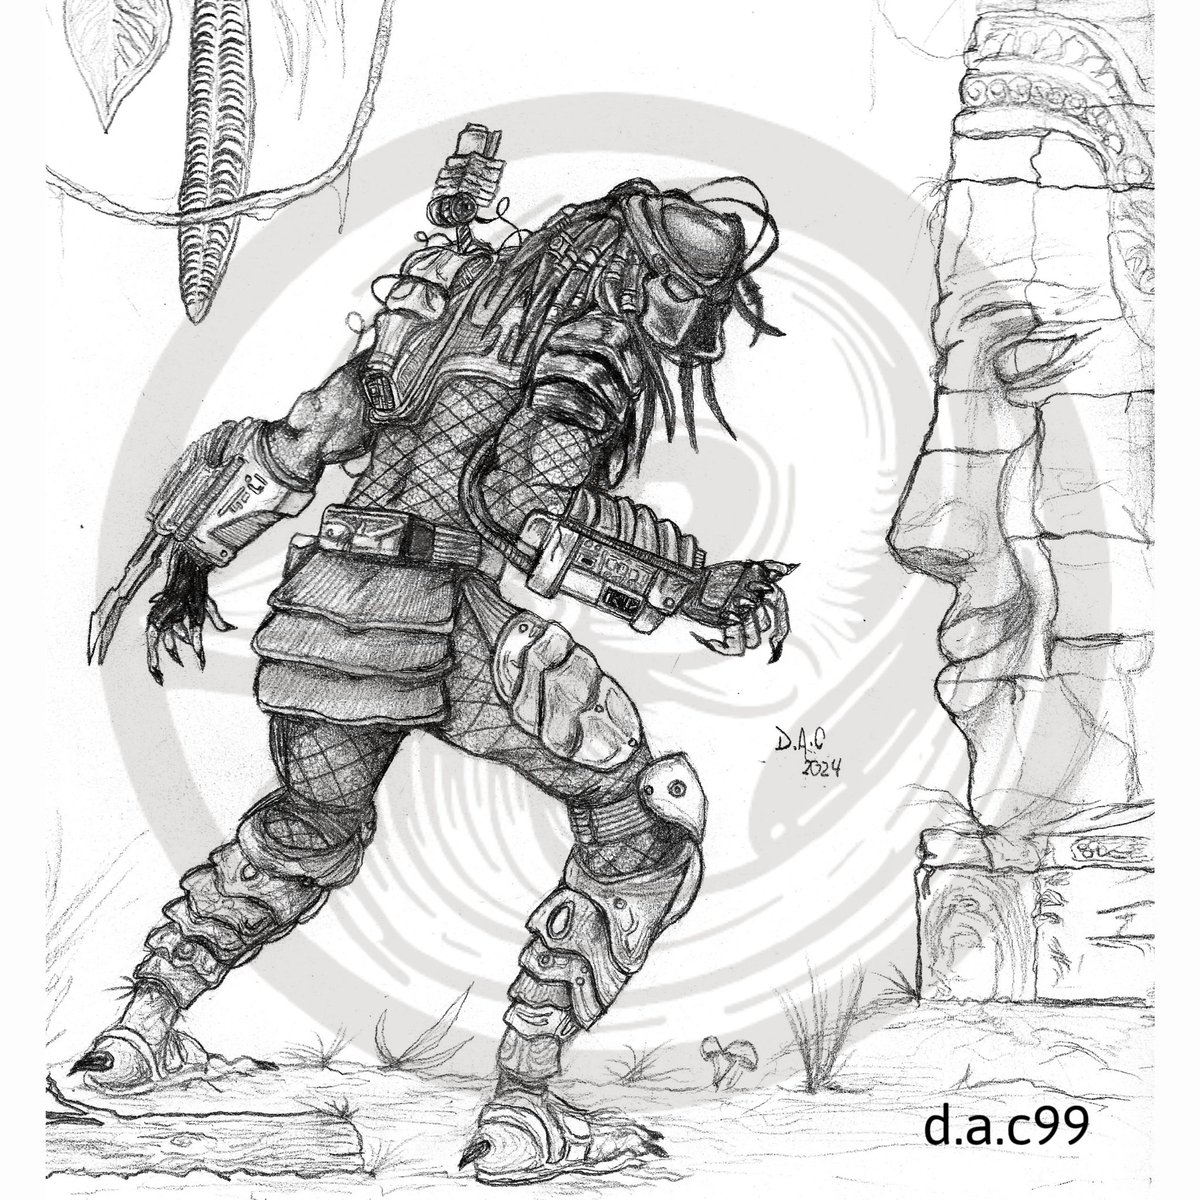 Predator (2024)

Inspired in the art of Chris Warner.

#art #artist #artistsoninstagram #draw #drawing #dibujosalapiz #dibujo #illustration #inkdrawing #ink #fyp #fypシ #arte #marvel #comic #predator #alien #sciencefiction #hunter #instadraw #darkfantasy